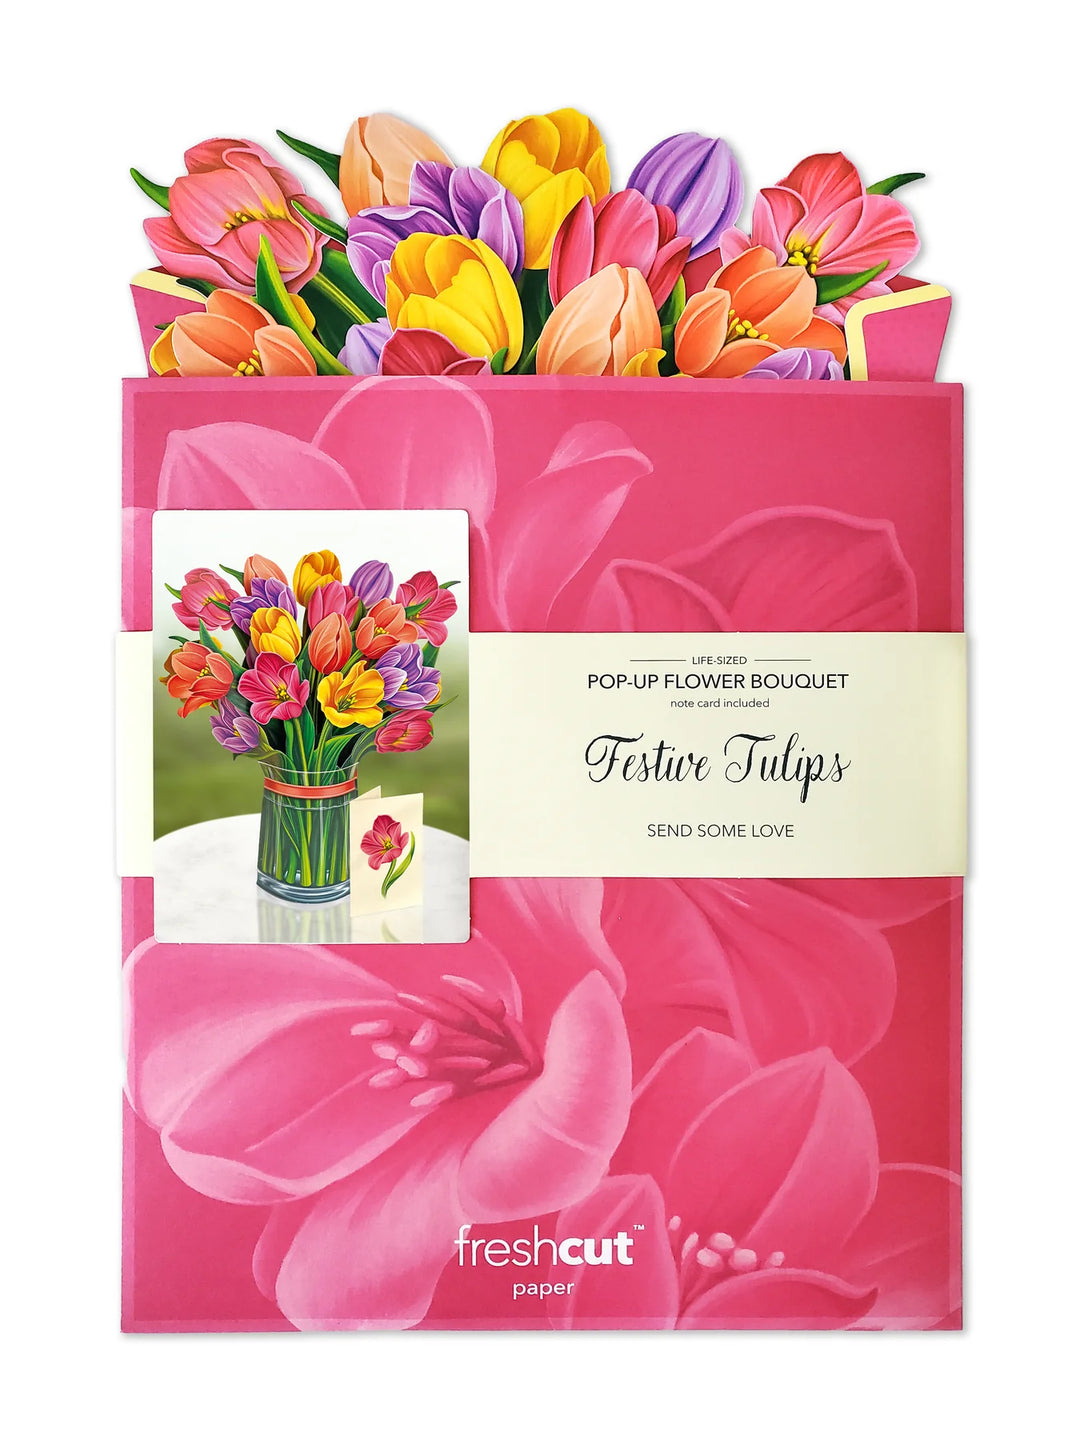 Festive Tulips Pop-up Flower Bouquet